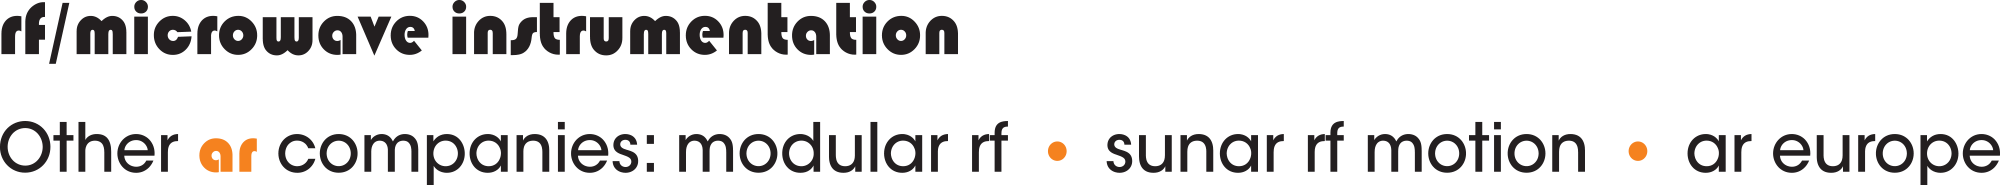 rf/microwave instrumentation - Other ar companies: modular rf - sunar rf motion - ar europe